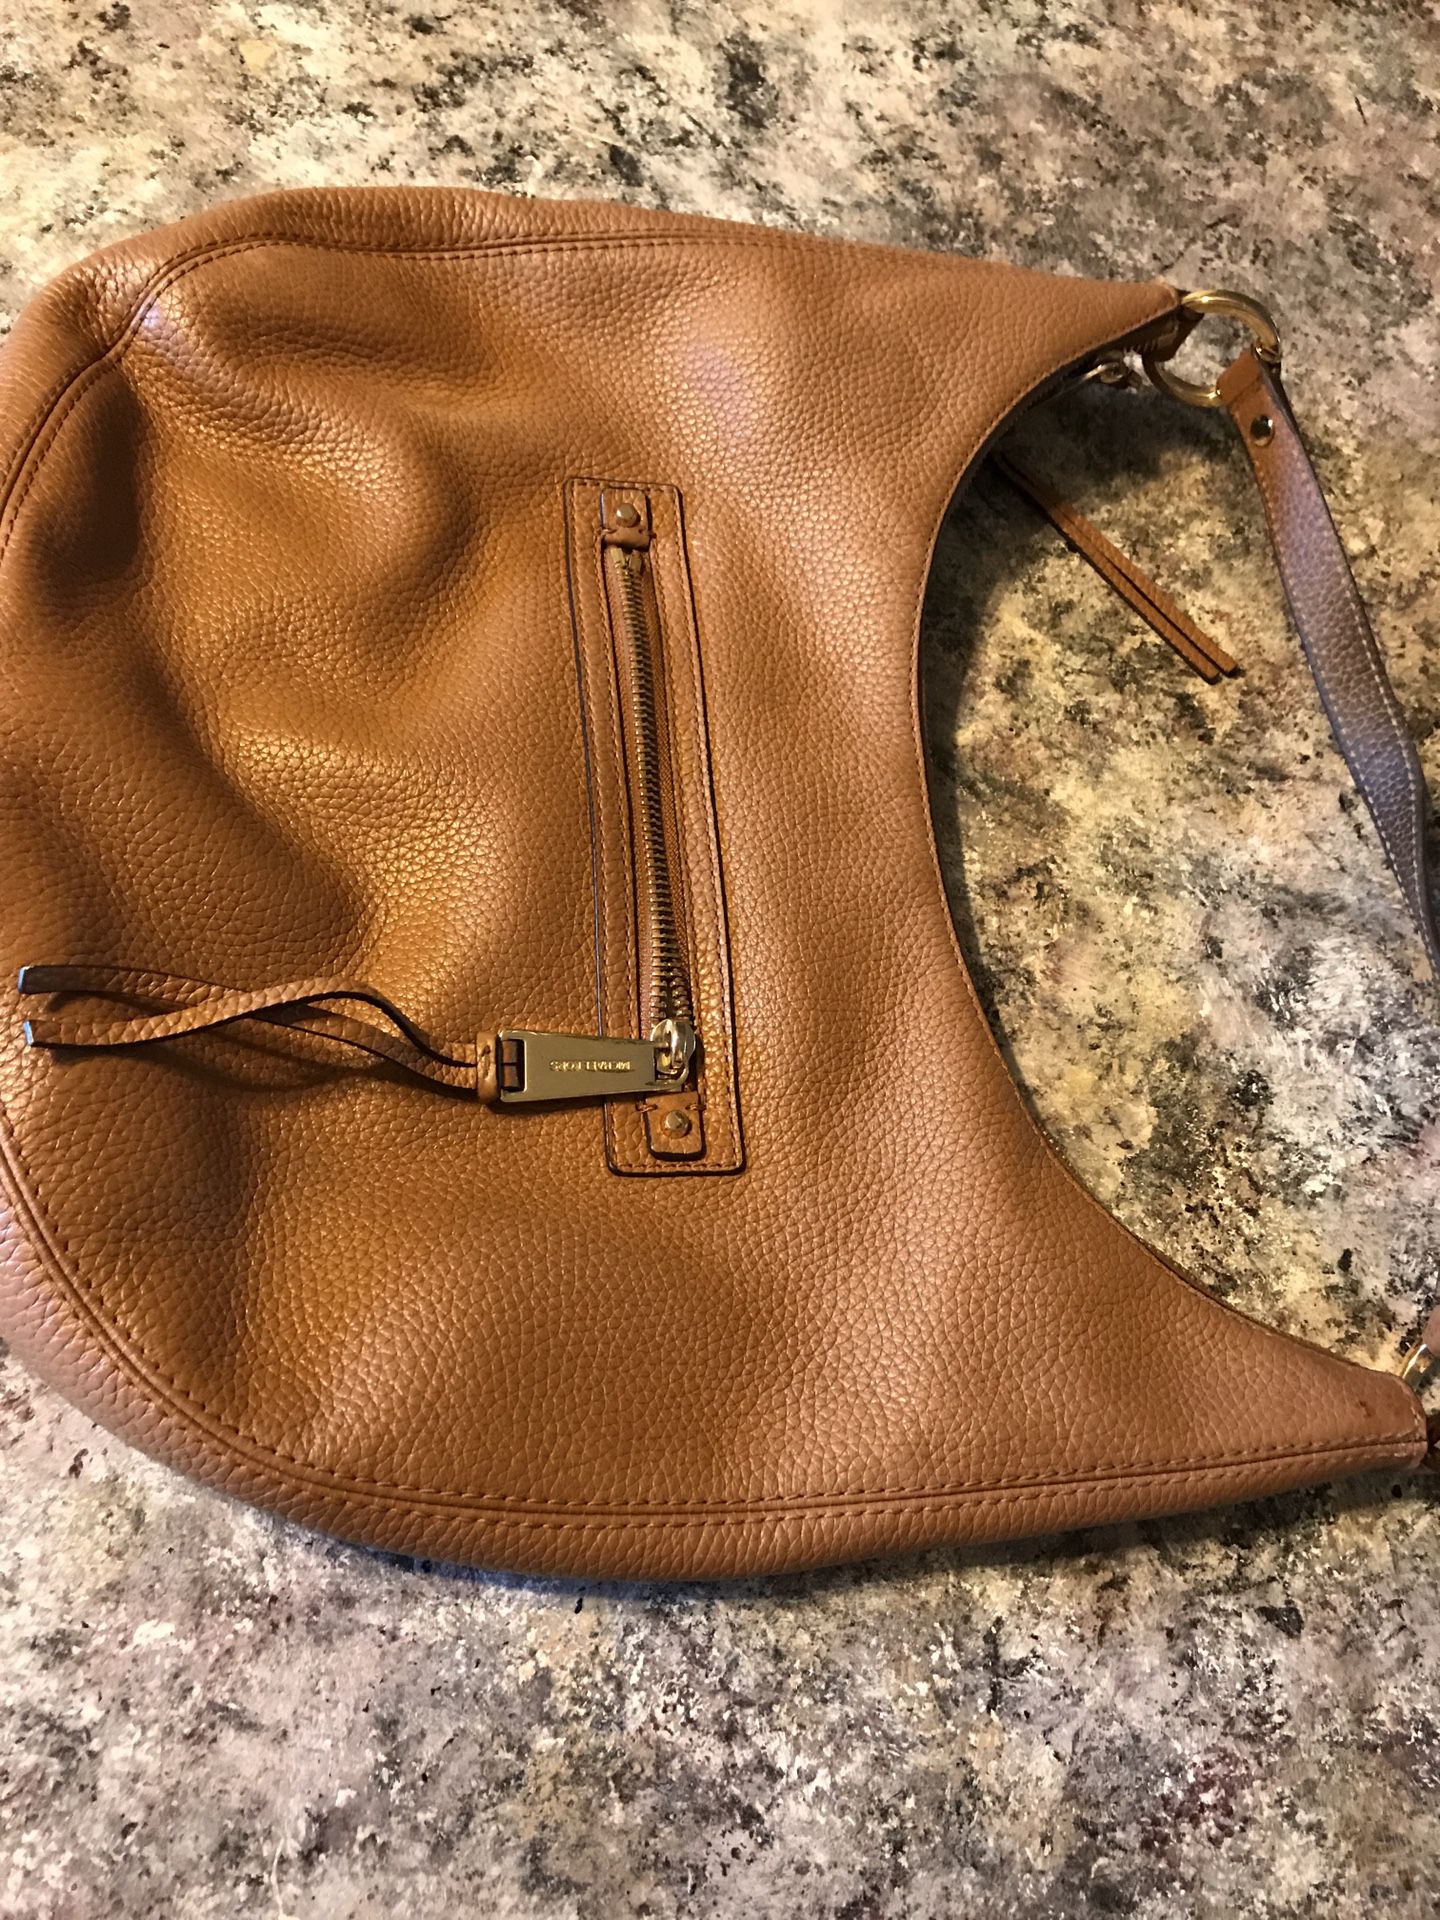 Authentic Michael Kors leather purse.